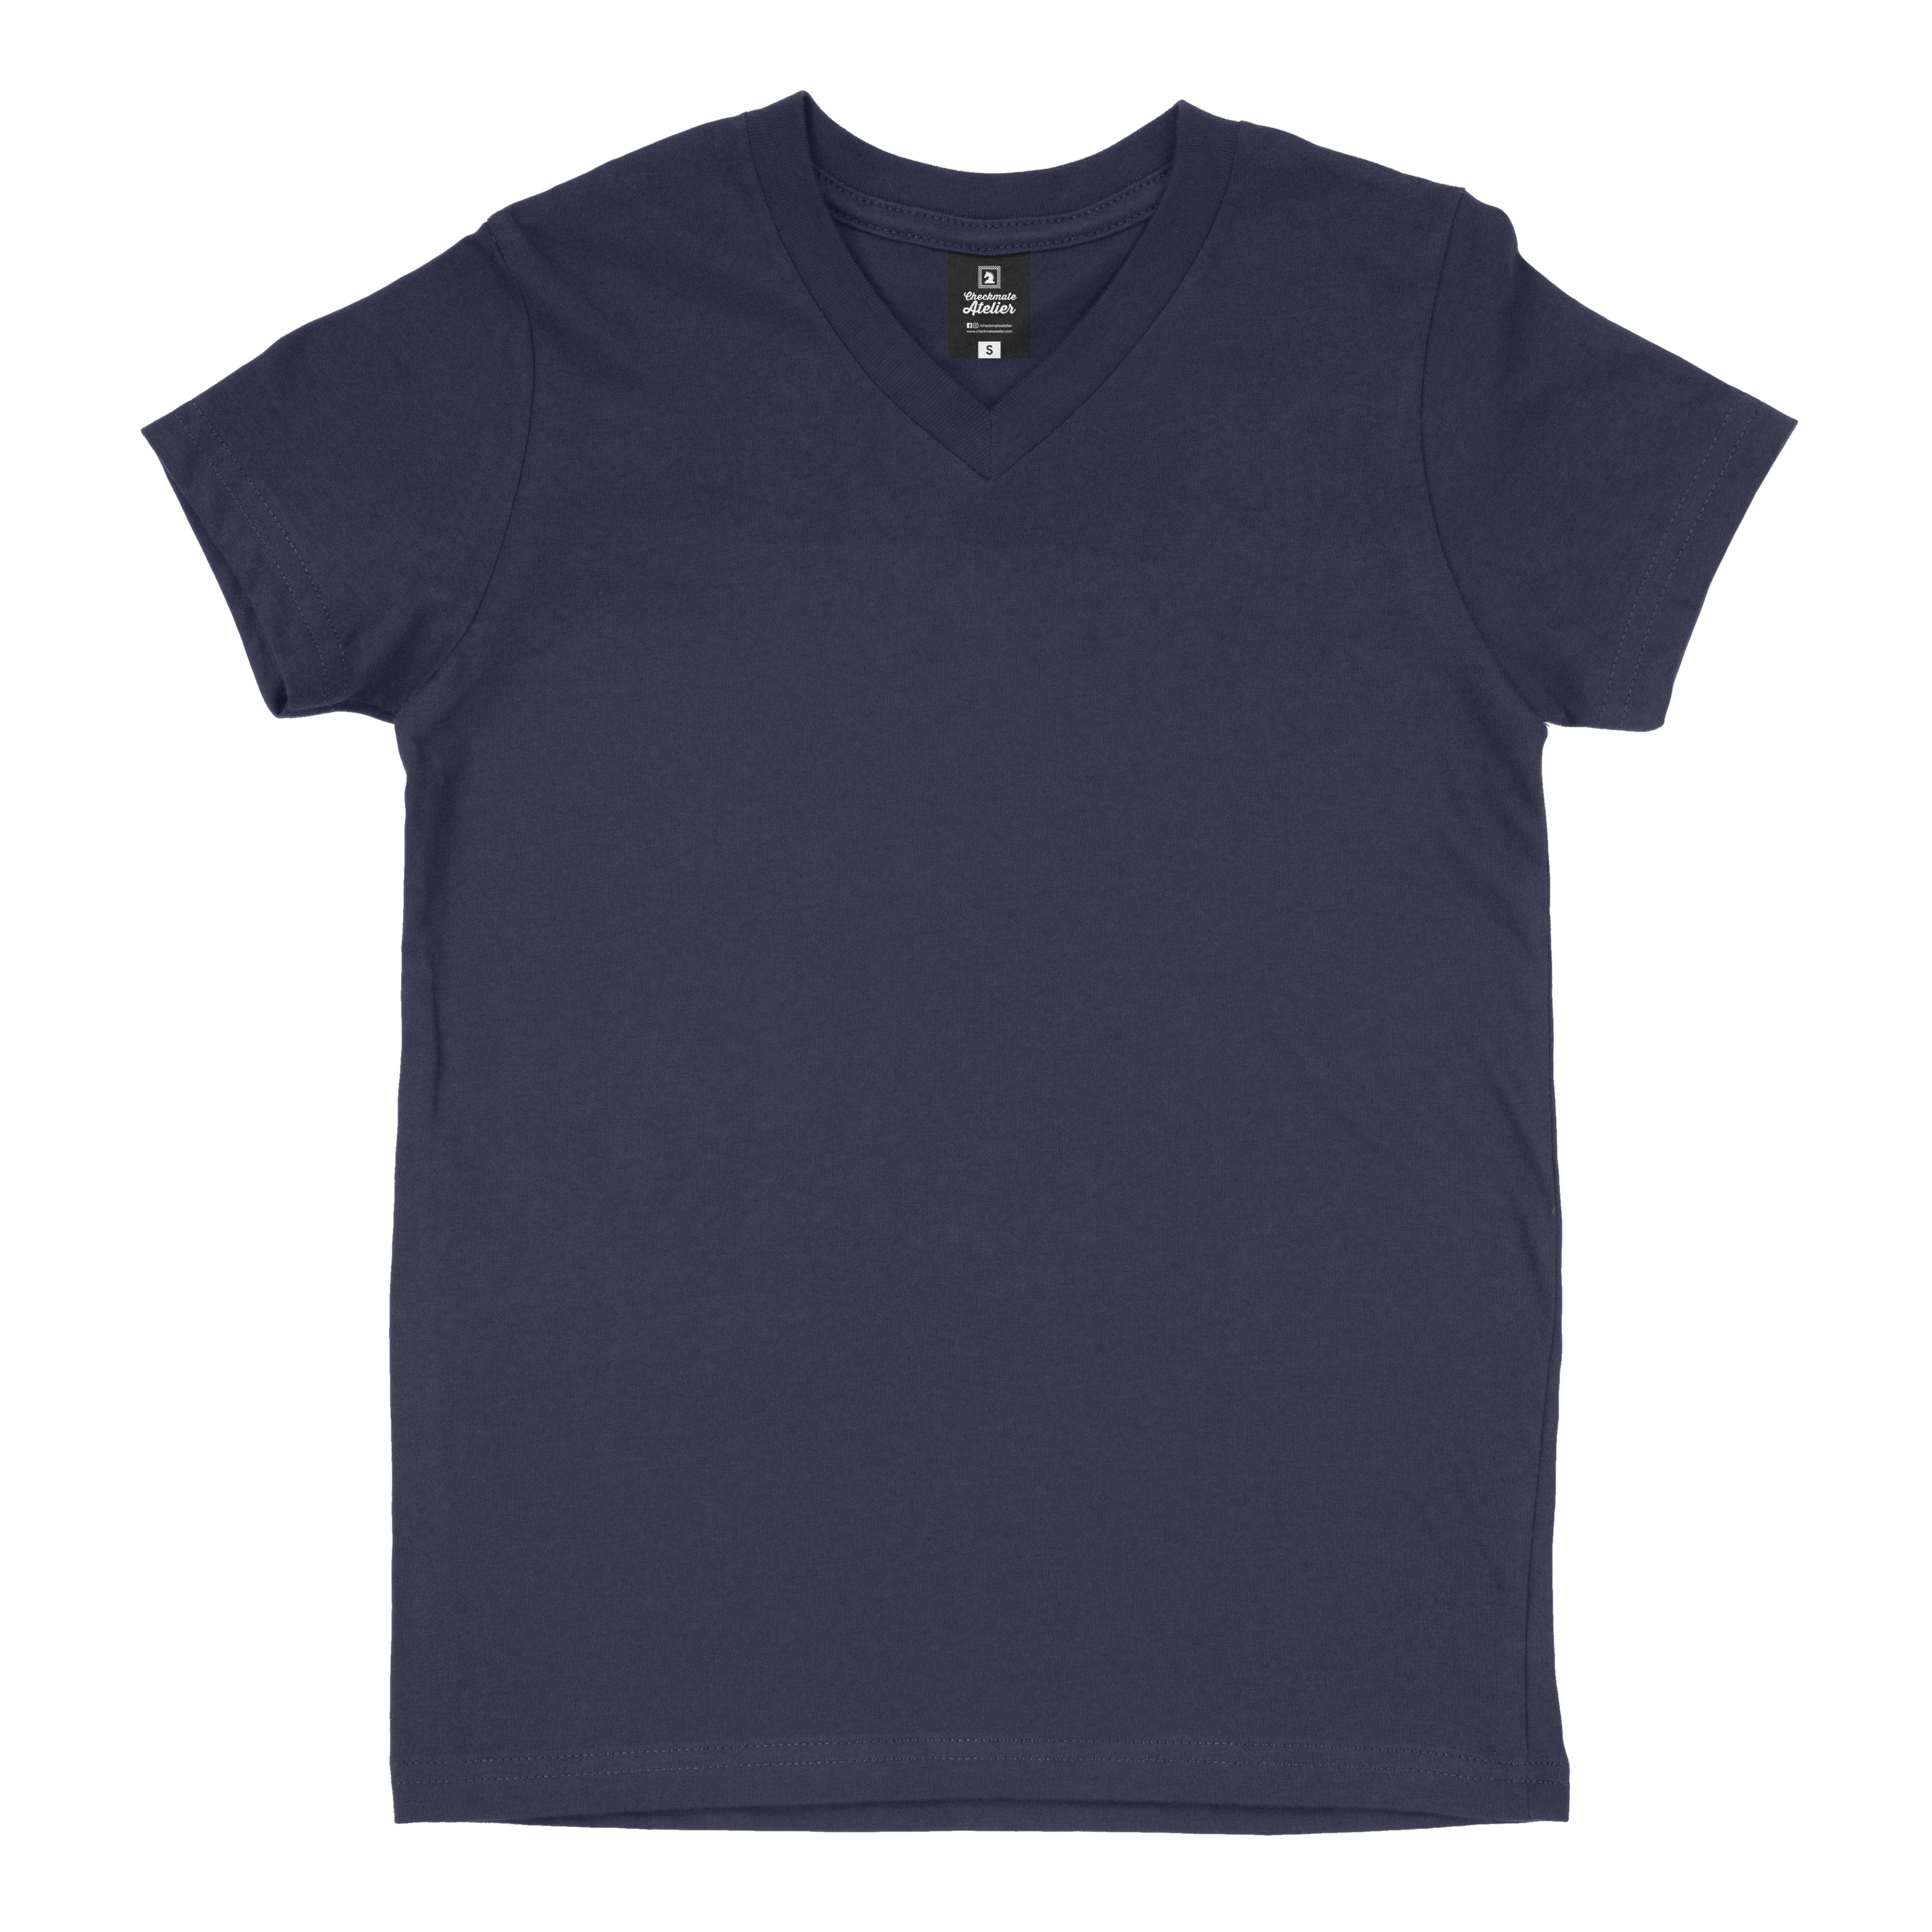 Navy Blue V-Neck T-Shirt  (2XL - 3XL) - Shop Now - Checkmate Atelier